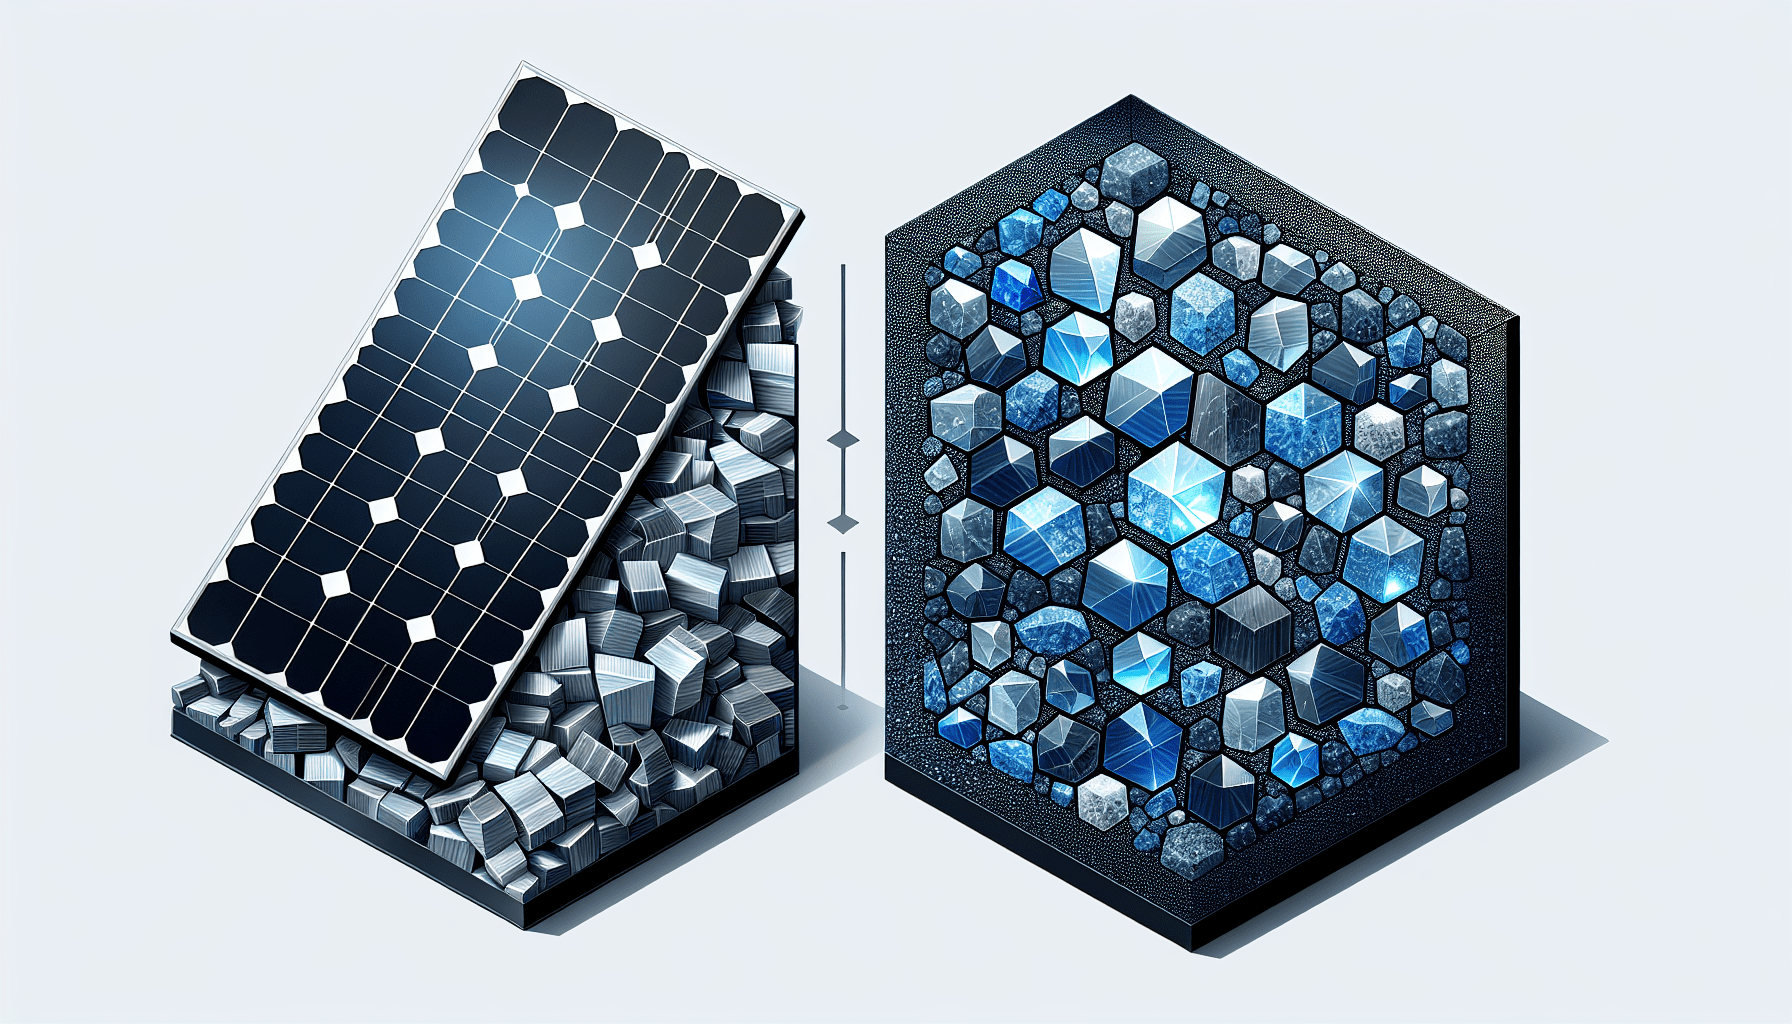 Comparison of monocrystalline and polycrystalline solar panels